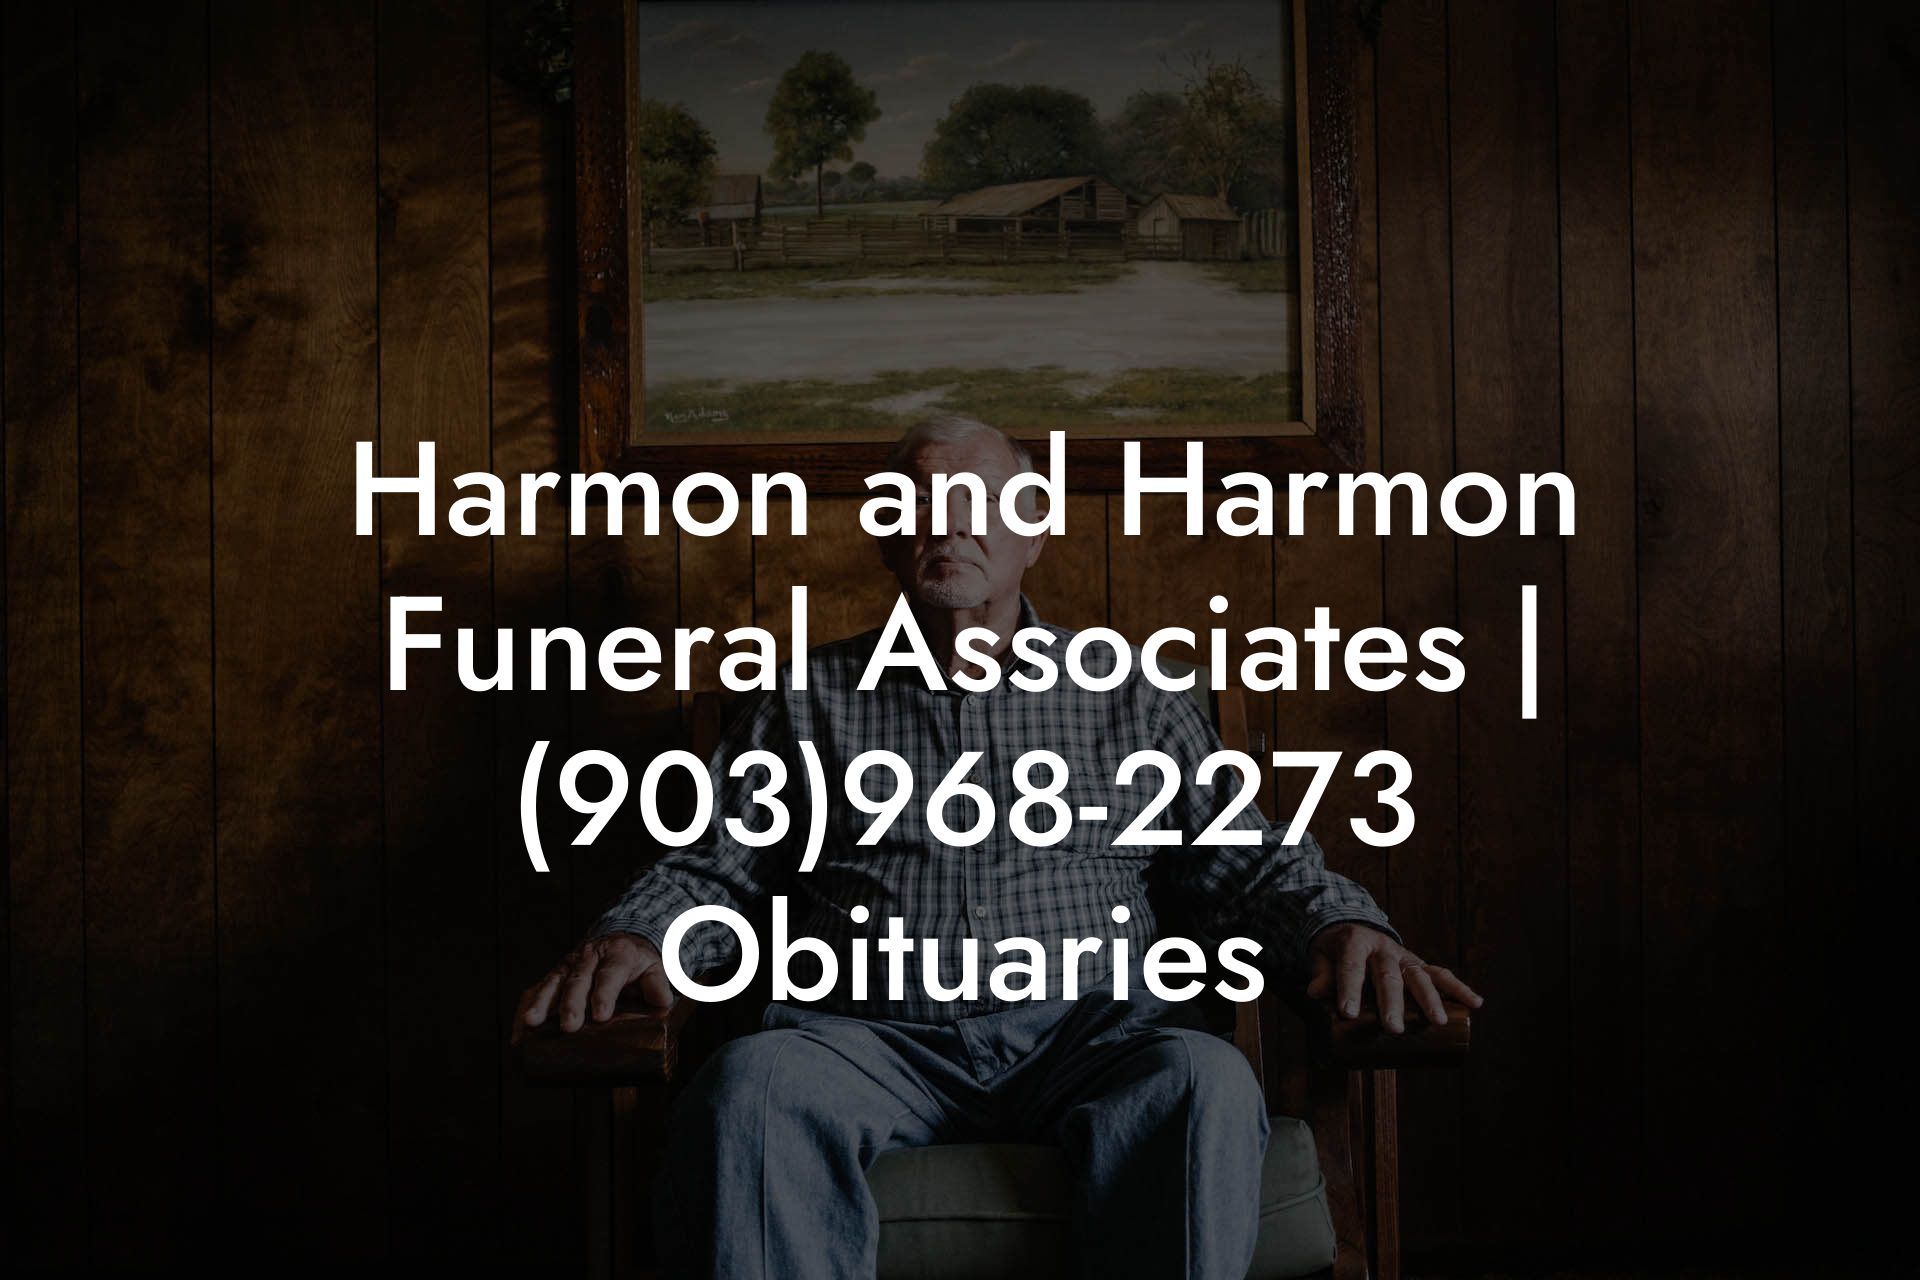 Harmon and Harmon Funeral Associates | (903)968-2273 Obituaries